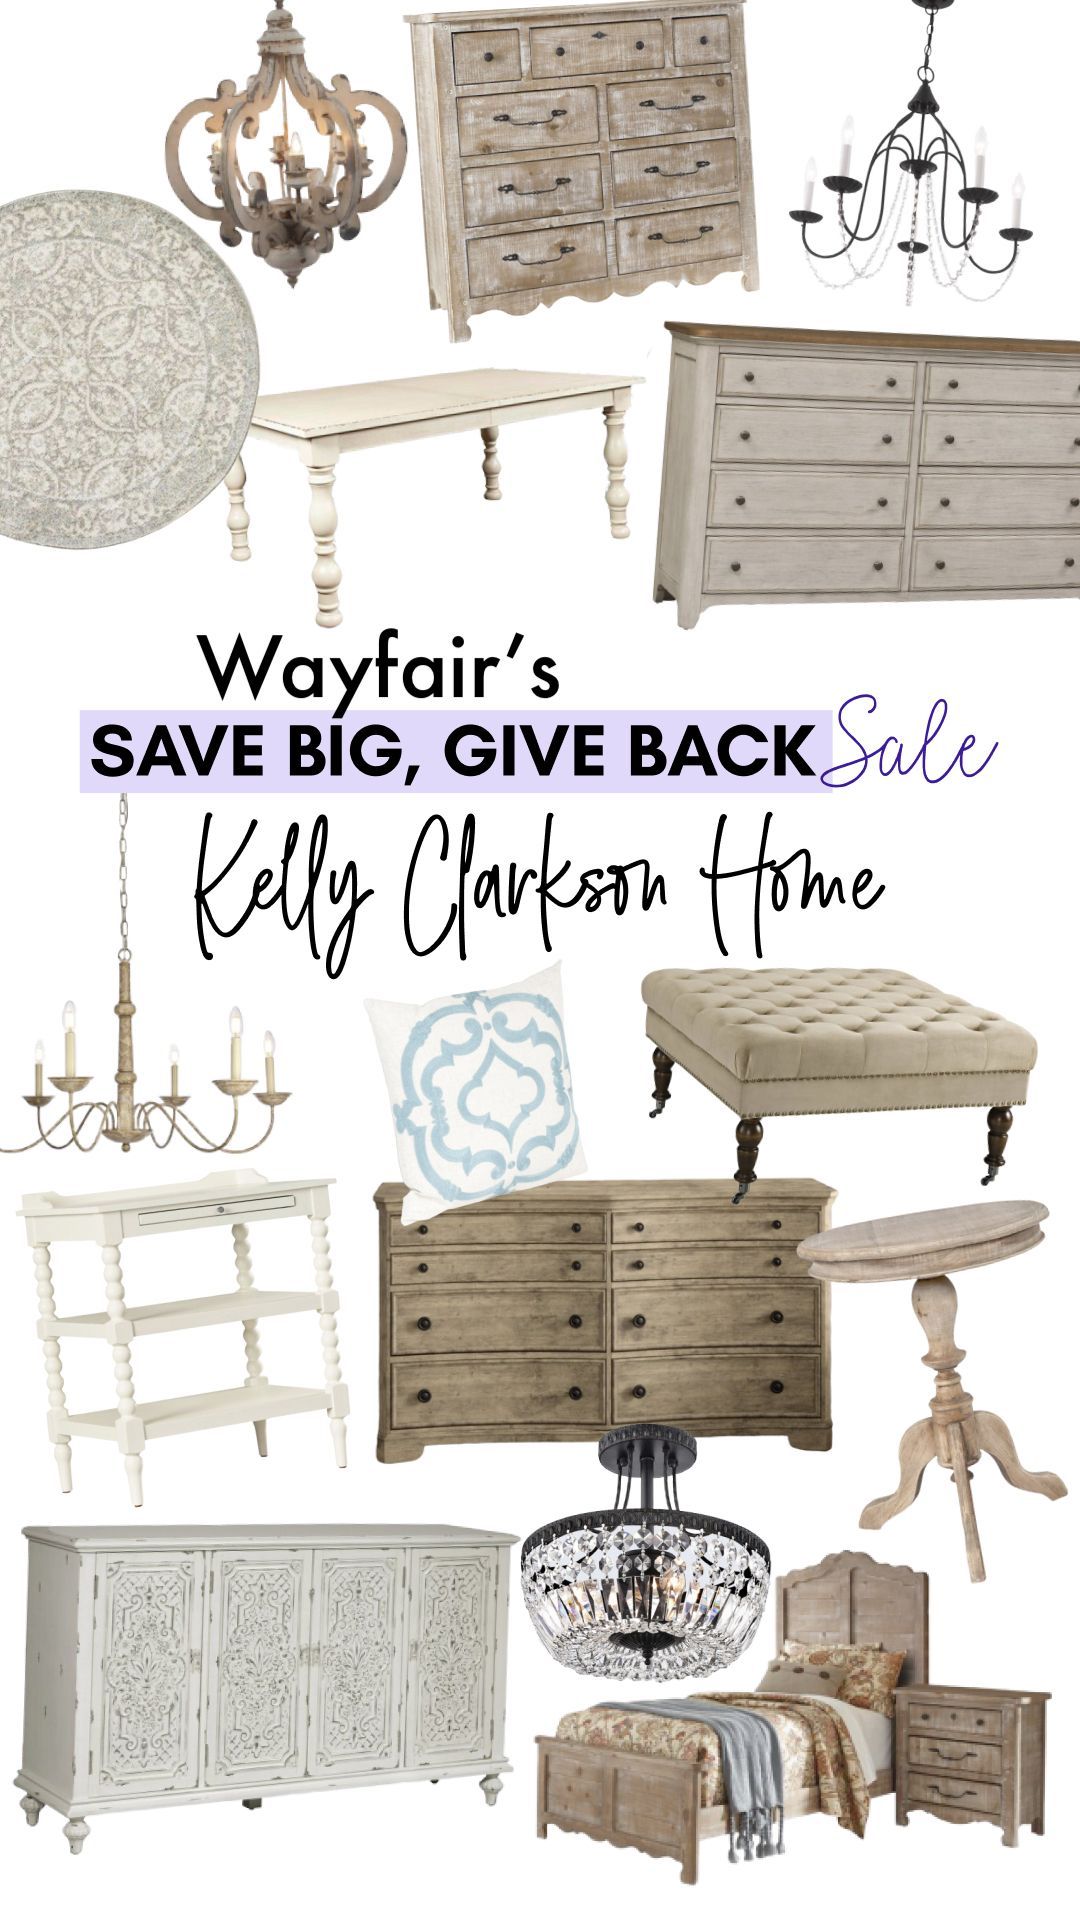 Wayfair's Save Big Give Back Sale - Kelly Clarkson Home on Sale!!